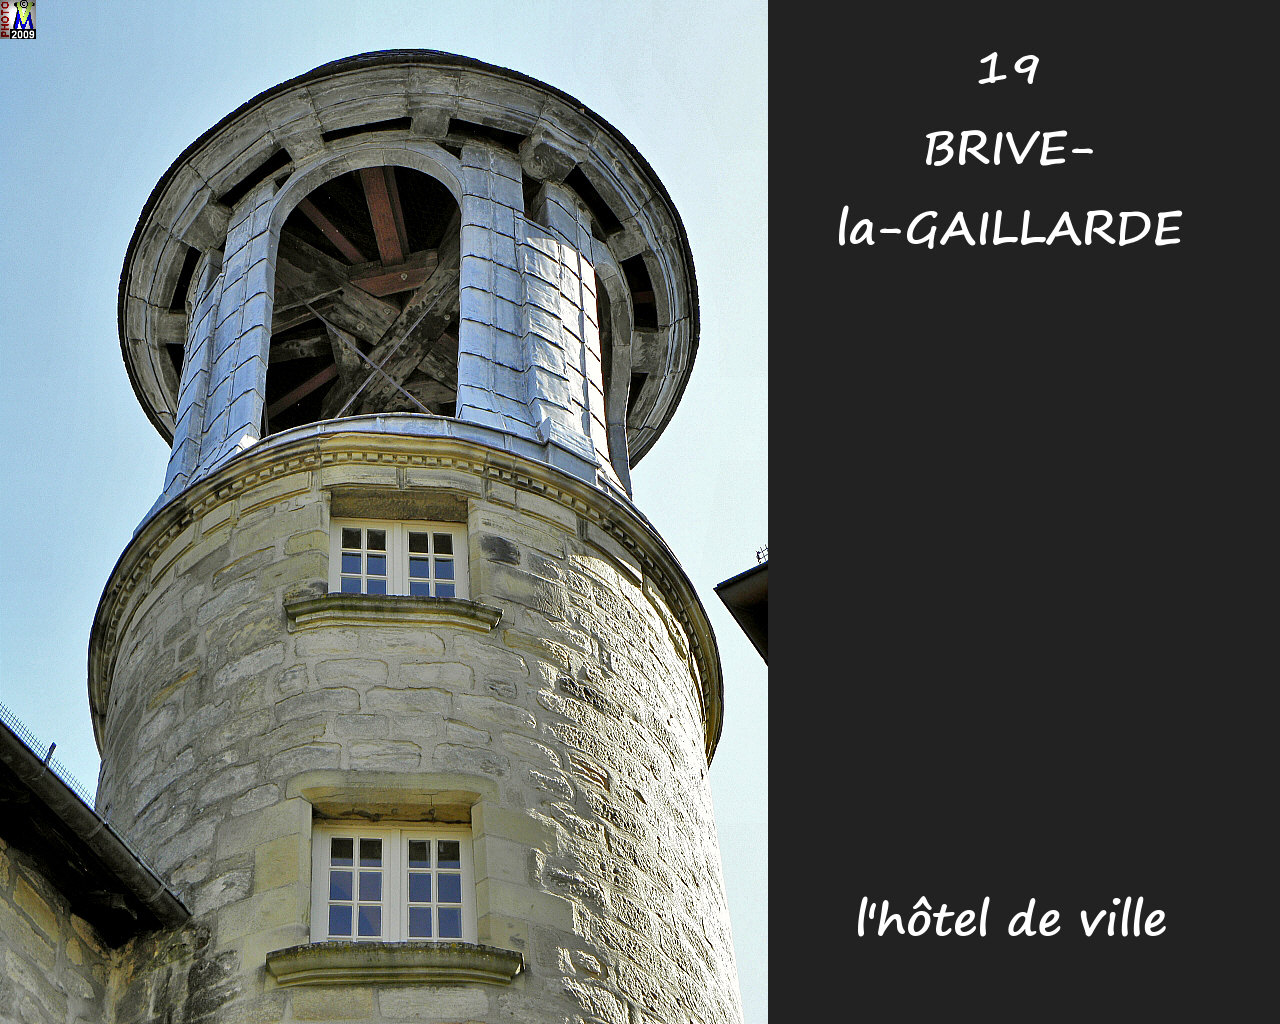 19BRIVE-GAILLARDE_mairie_114.jpg